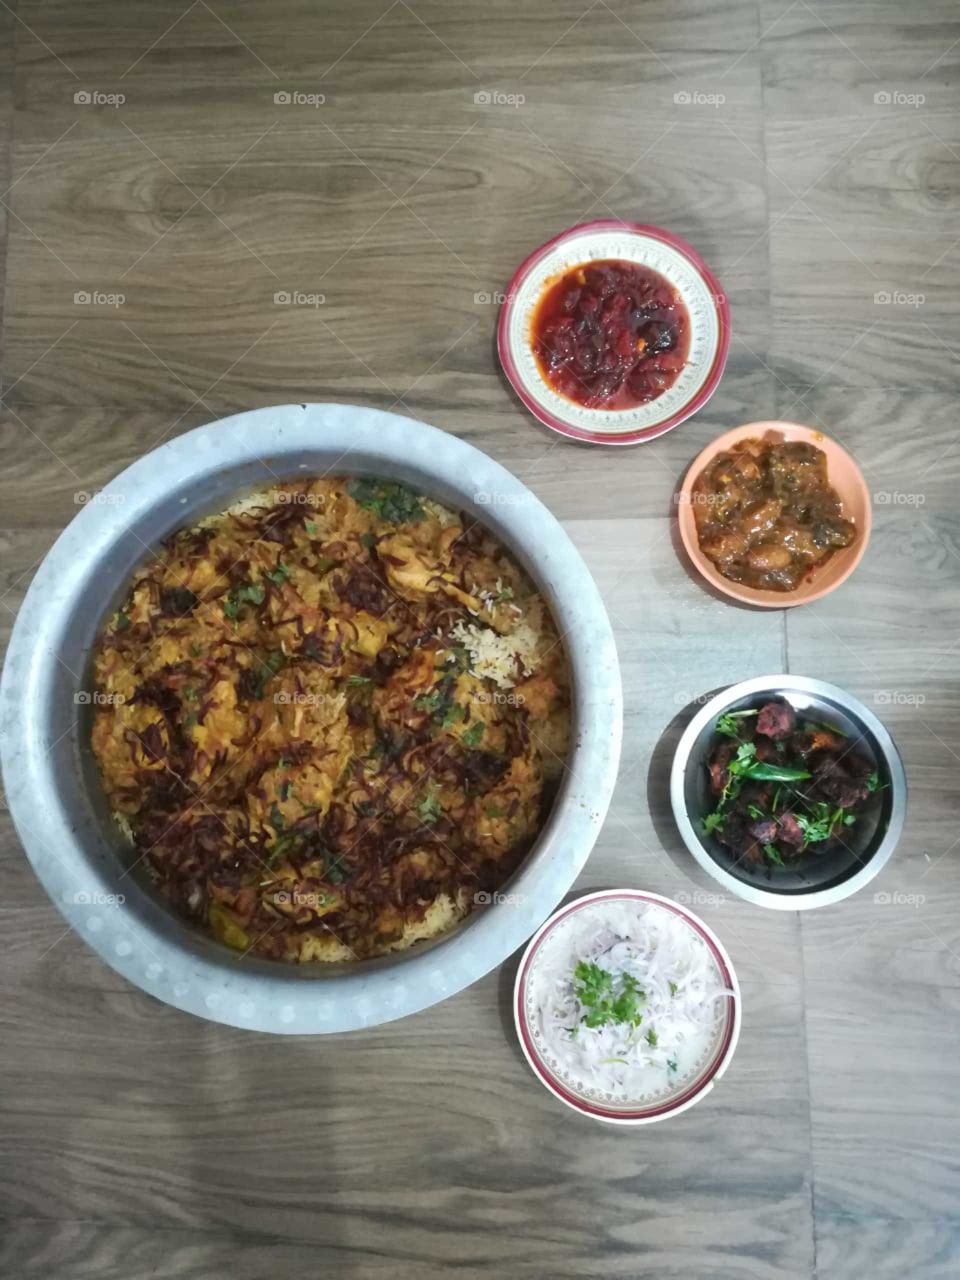 It’s a home made tasty biryani 